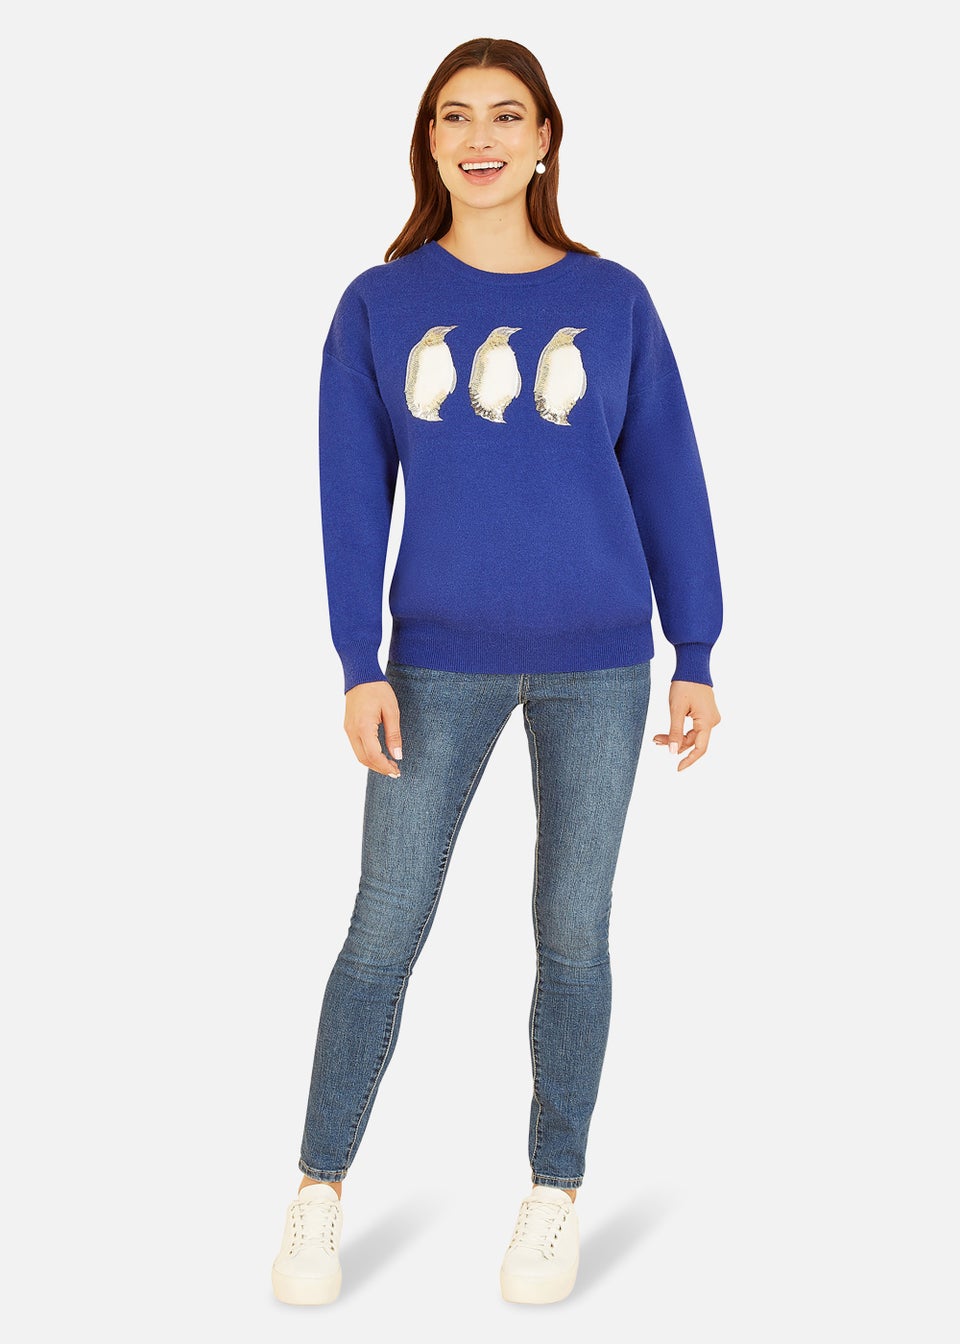 Yumi Blue Xmas Festive Penguin Knitted Jumper